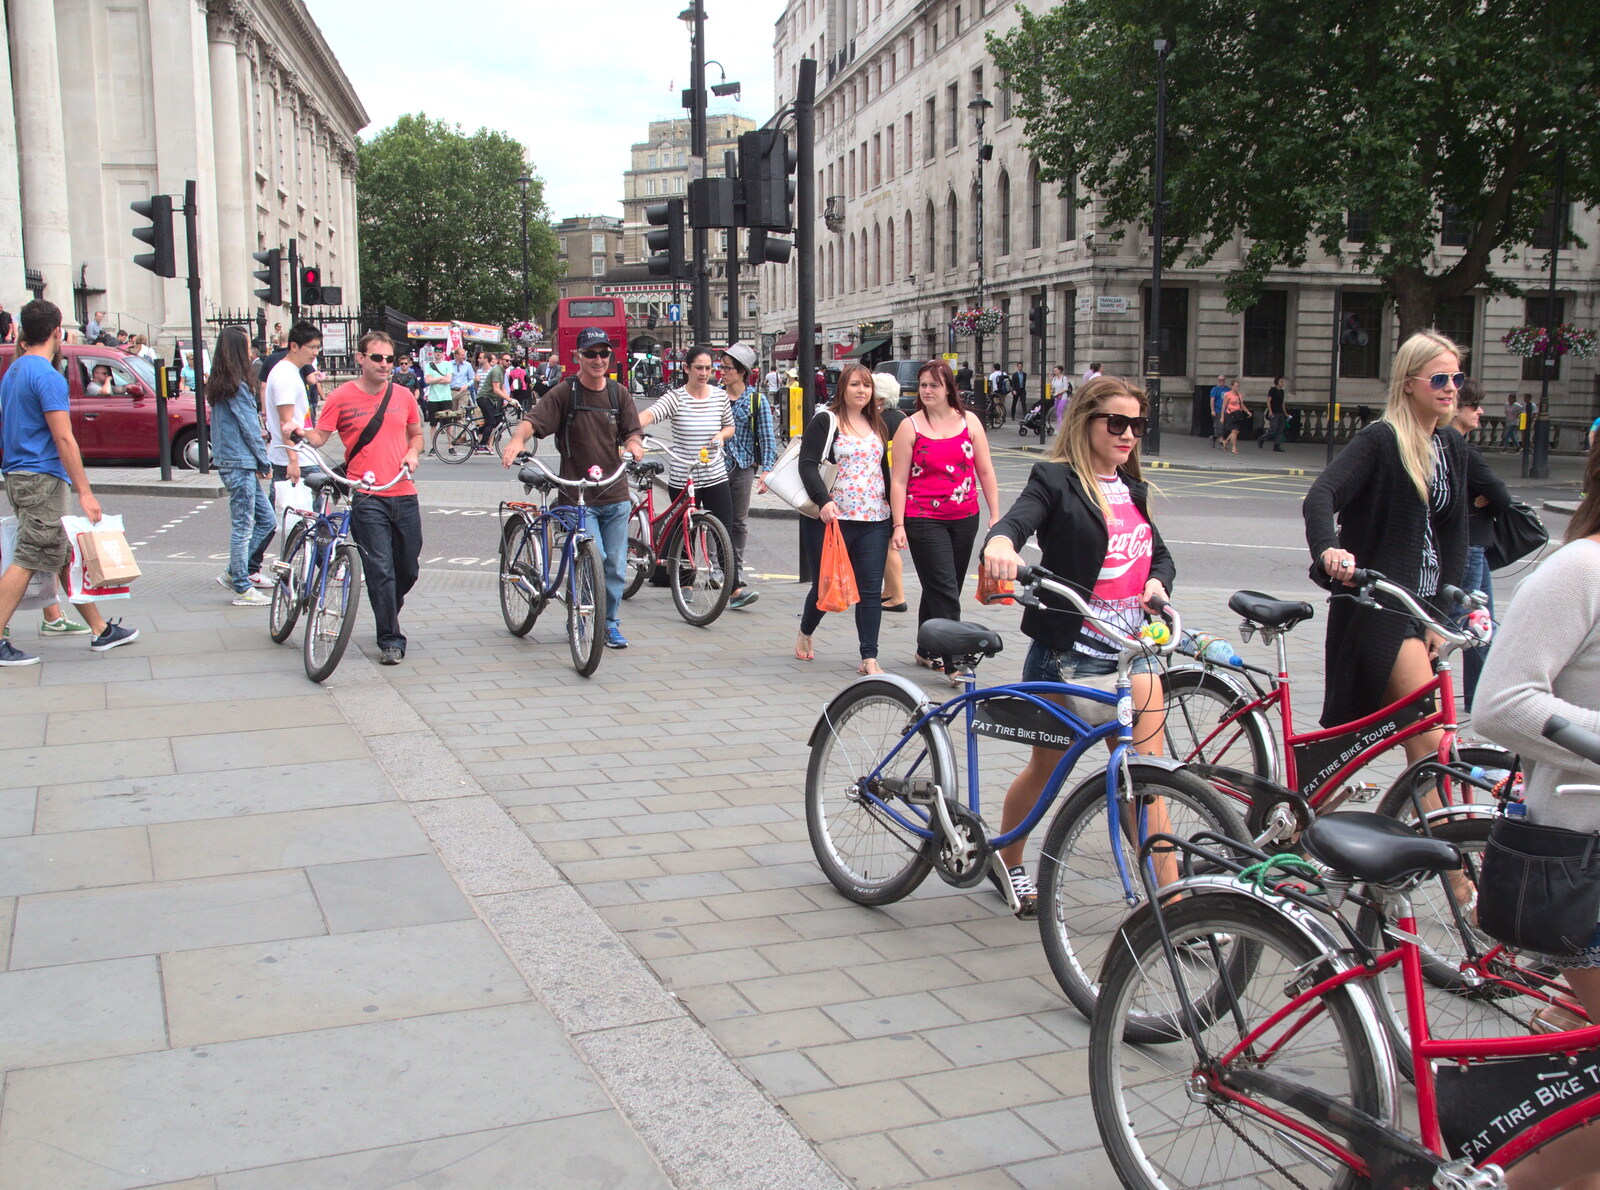 A bike-tour group passes through Trafalgar Square from SwiftKey Innovation Days, The Haymarket, London - 27th June 2014